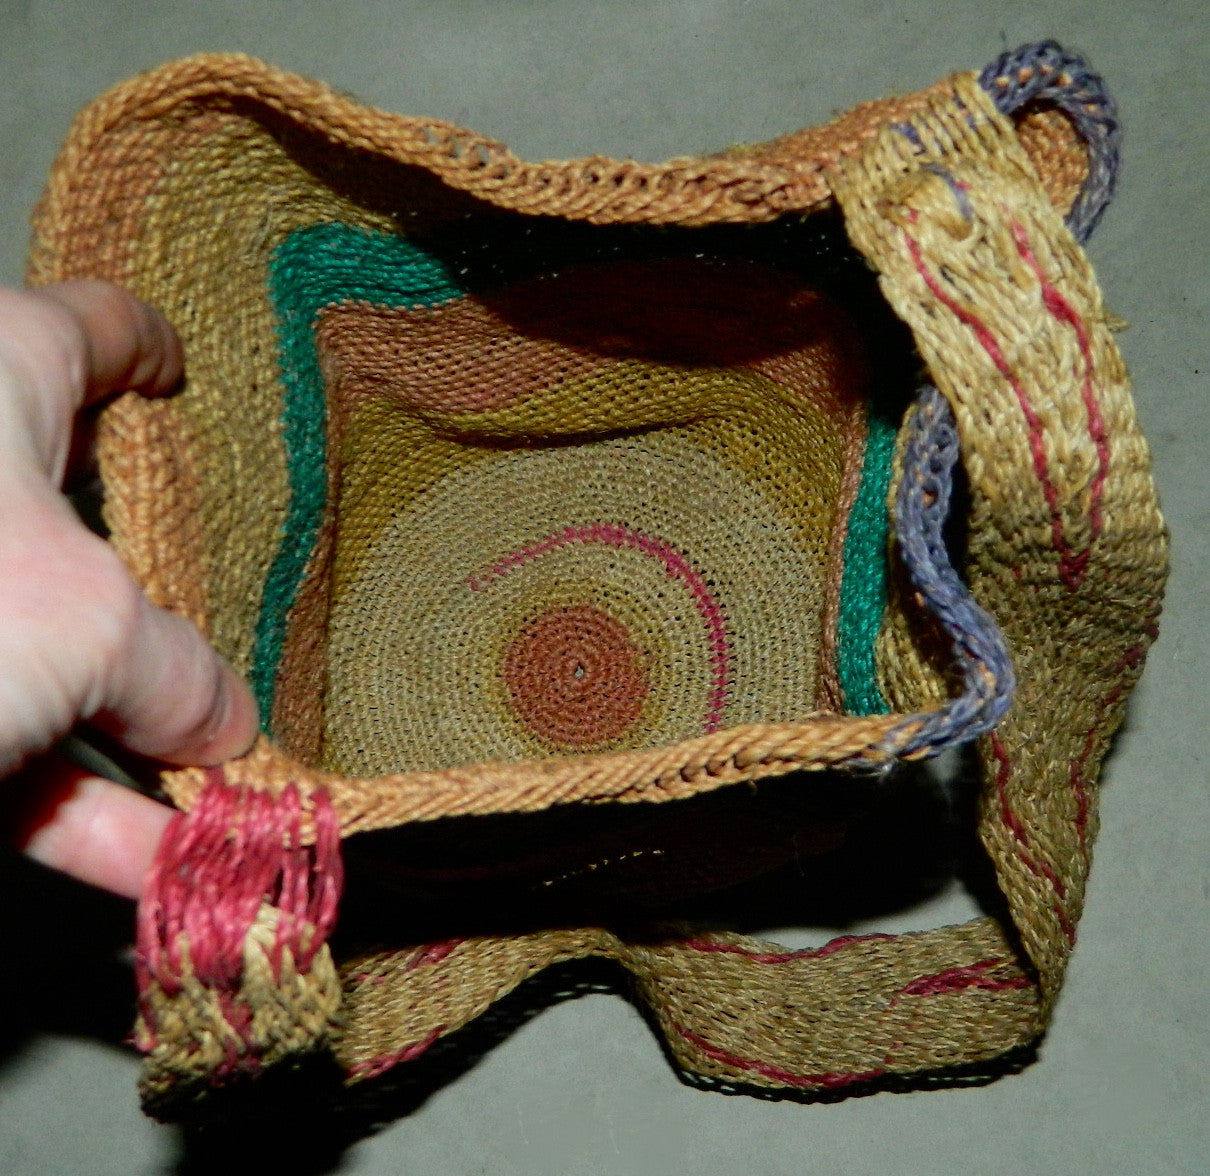 vintage 1940s striped seagrass tote / woven market basket bag